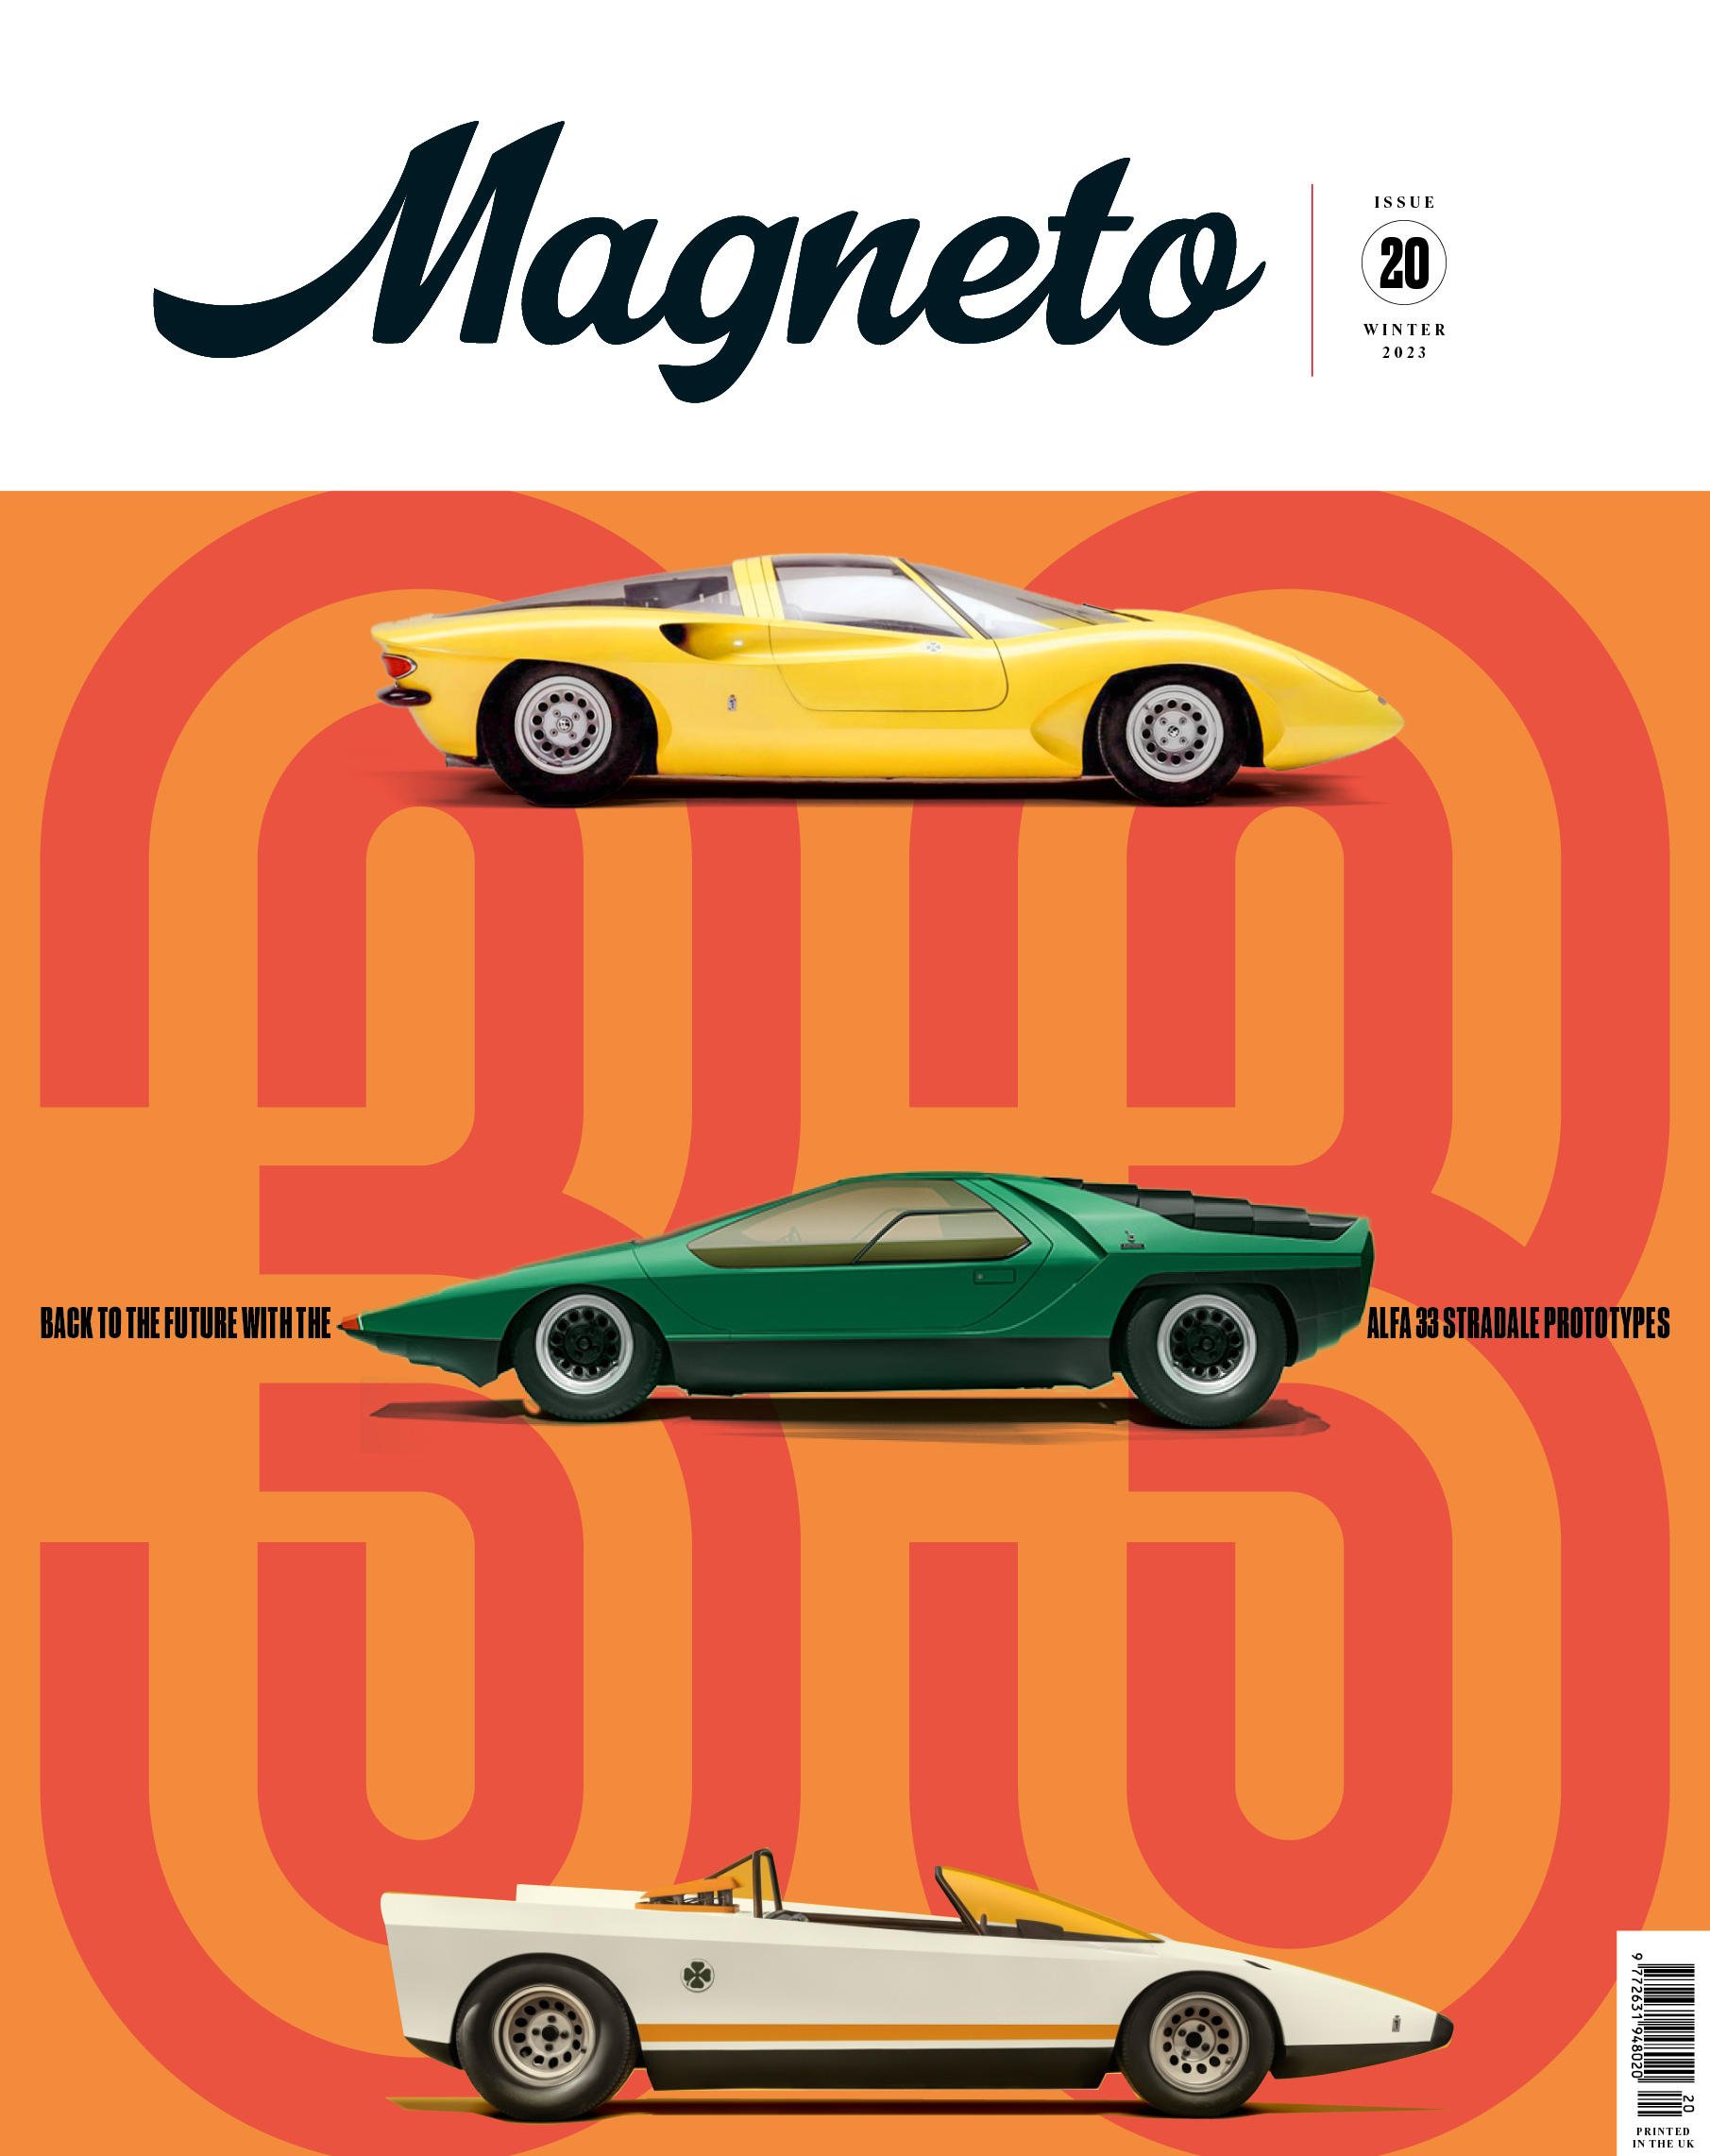 Magneto magazine issue 20